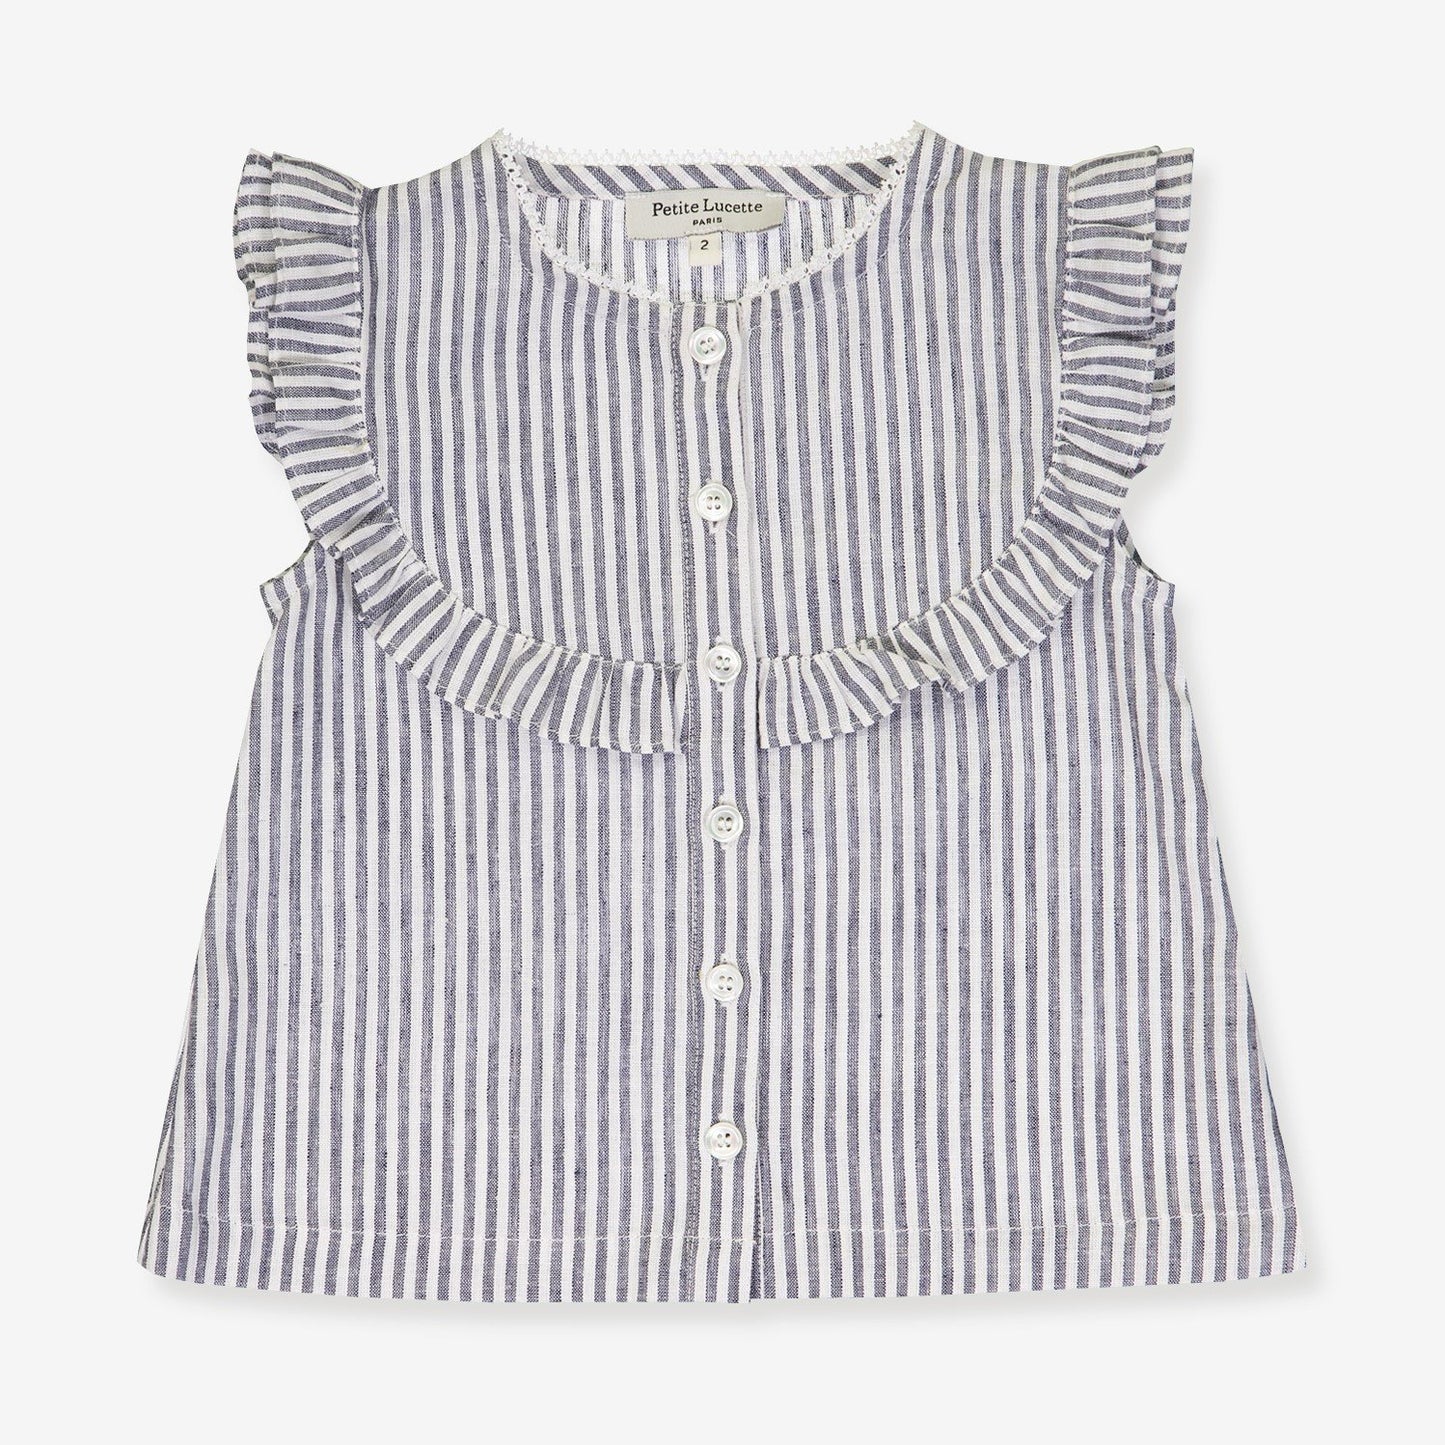 A Grey Stripes print blouse for girls